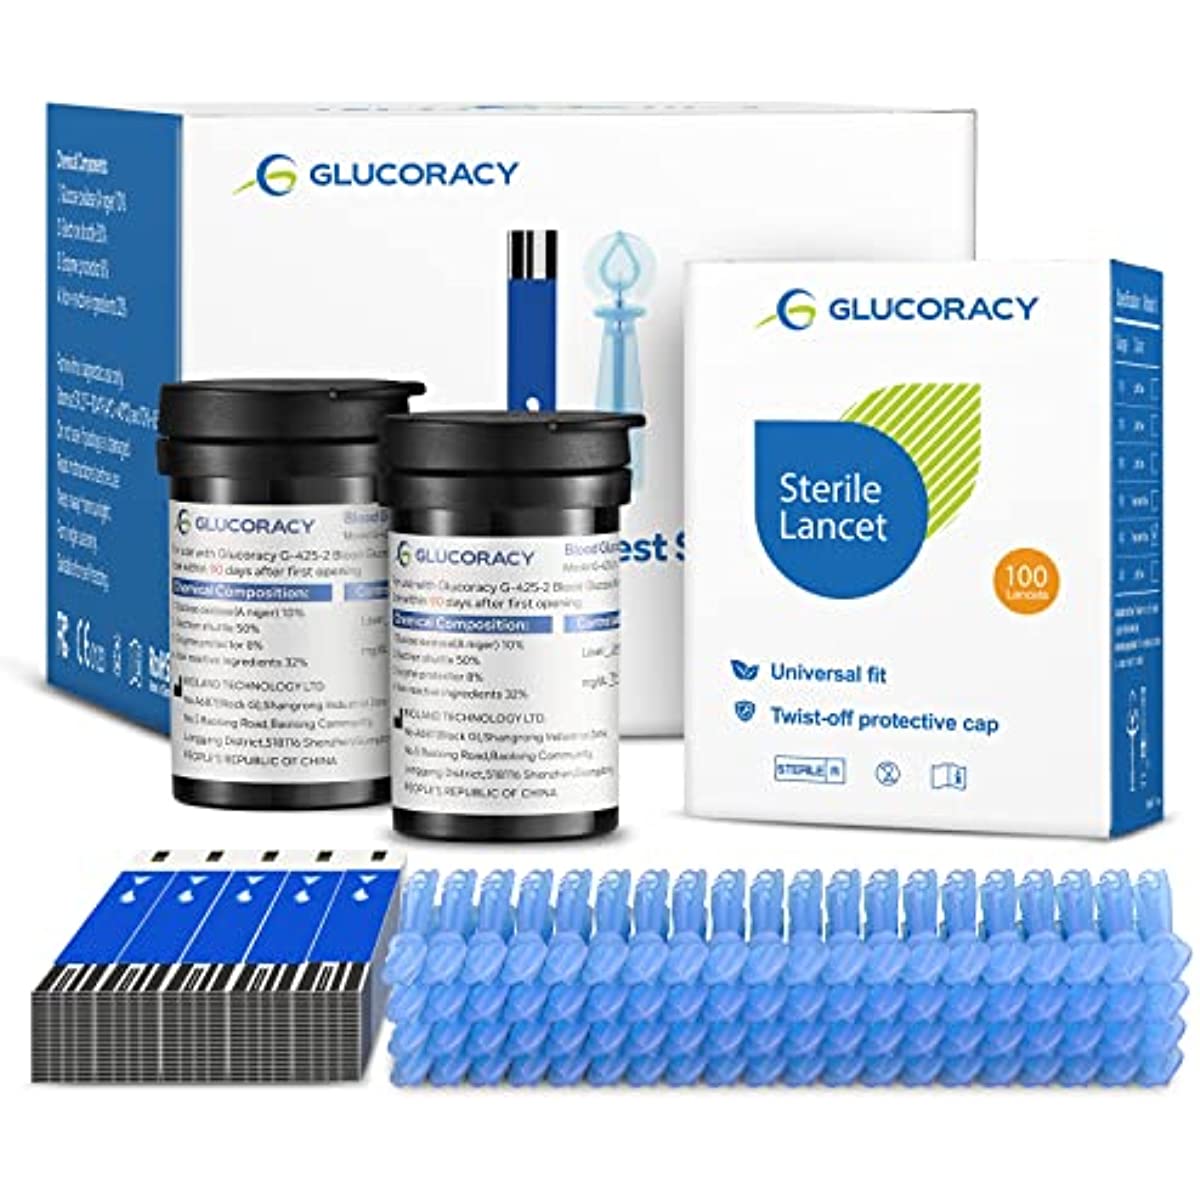 Glucoracy G-425-2 100 Test Strips & Lancets Kit